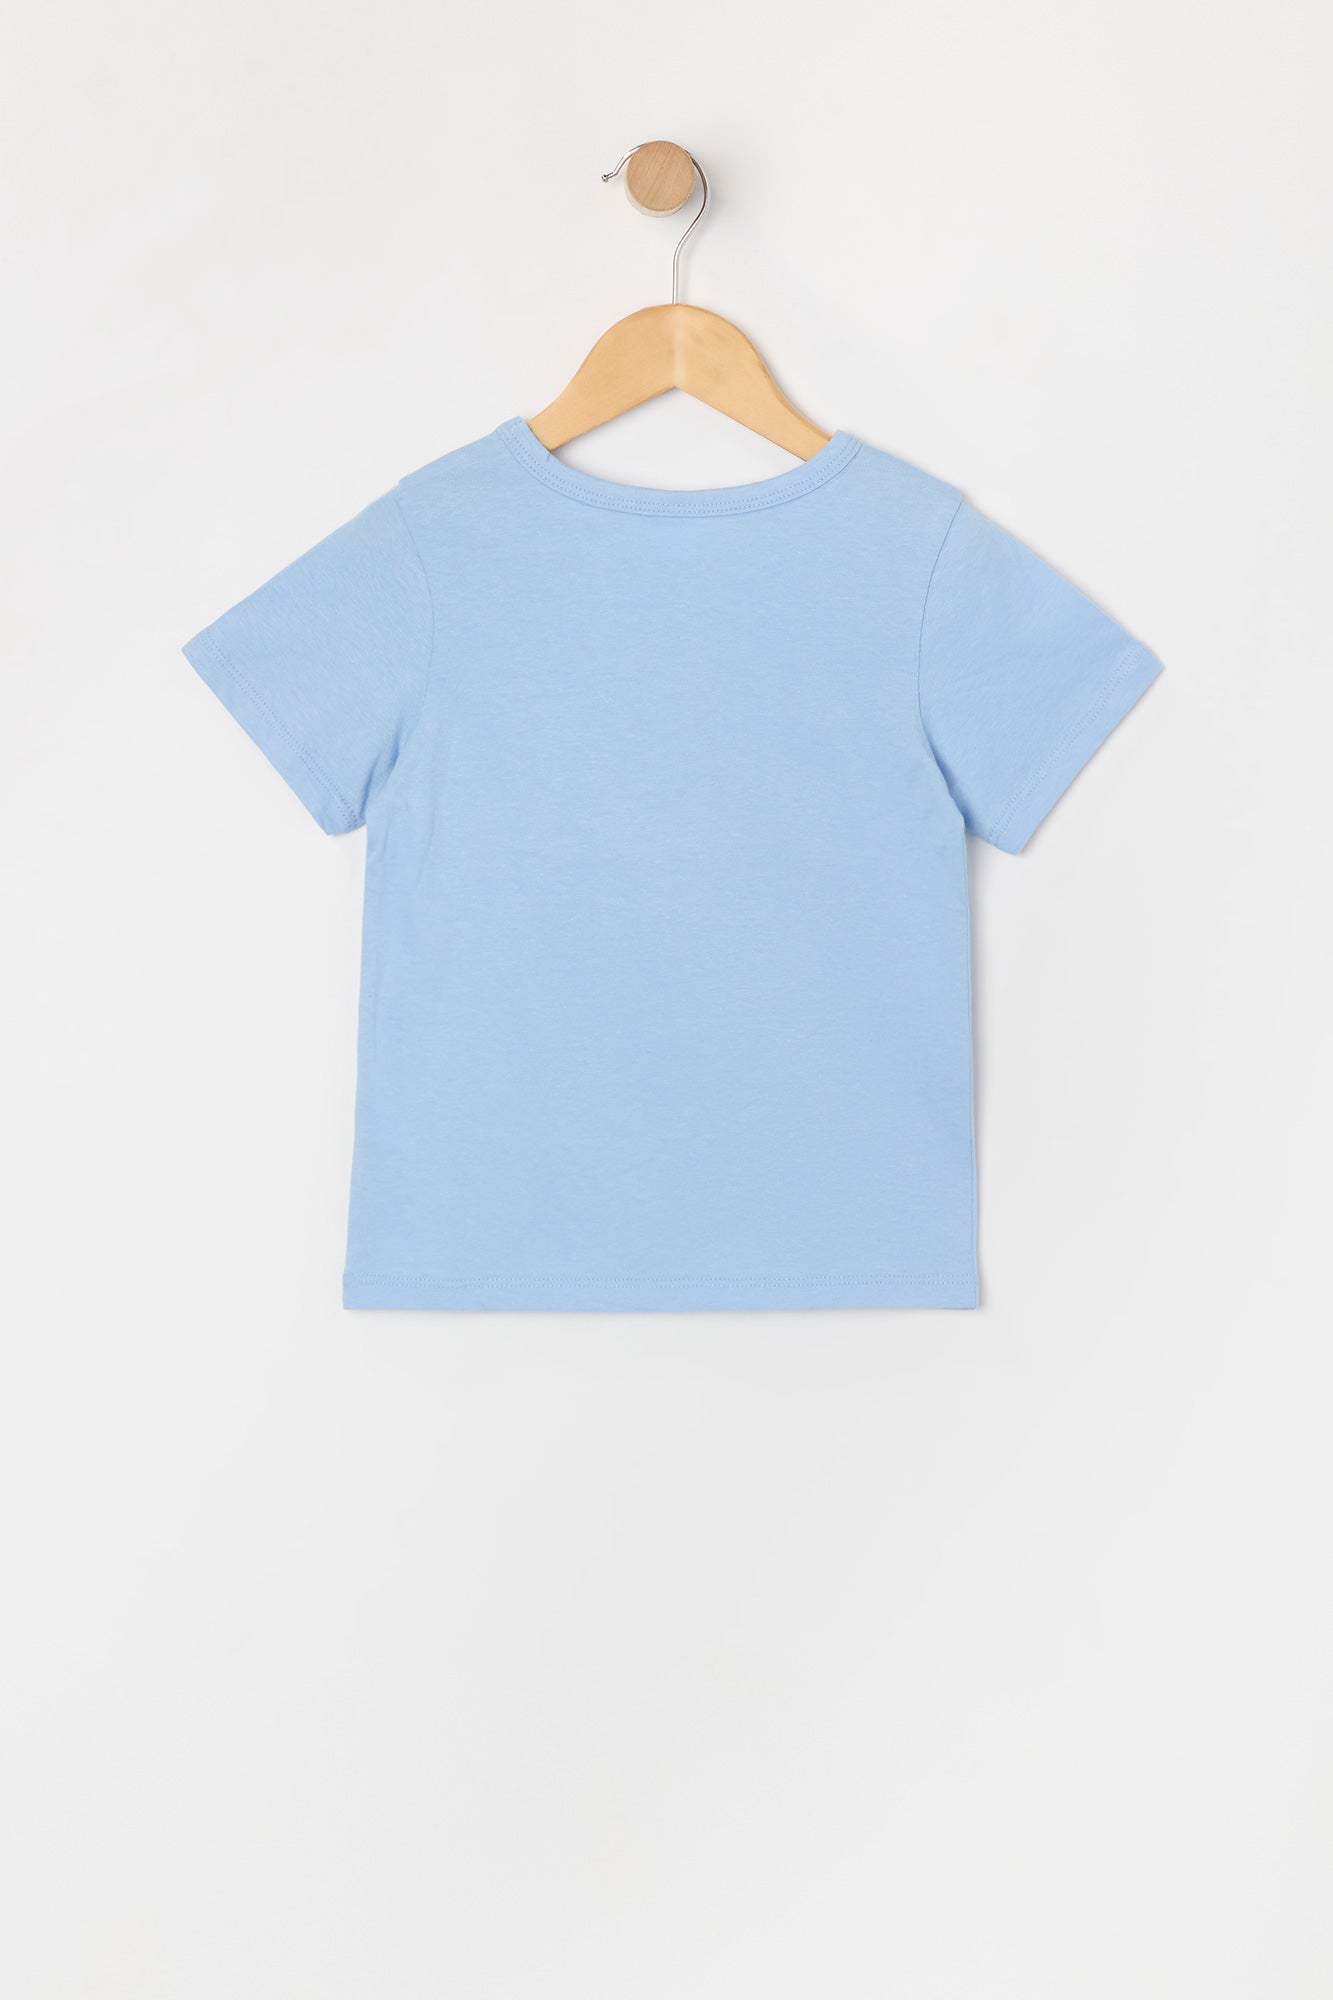 Toddler Boy Jawsome Graphic T-Shirt